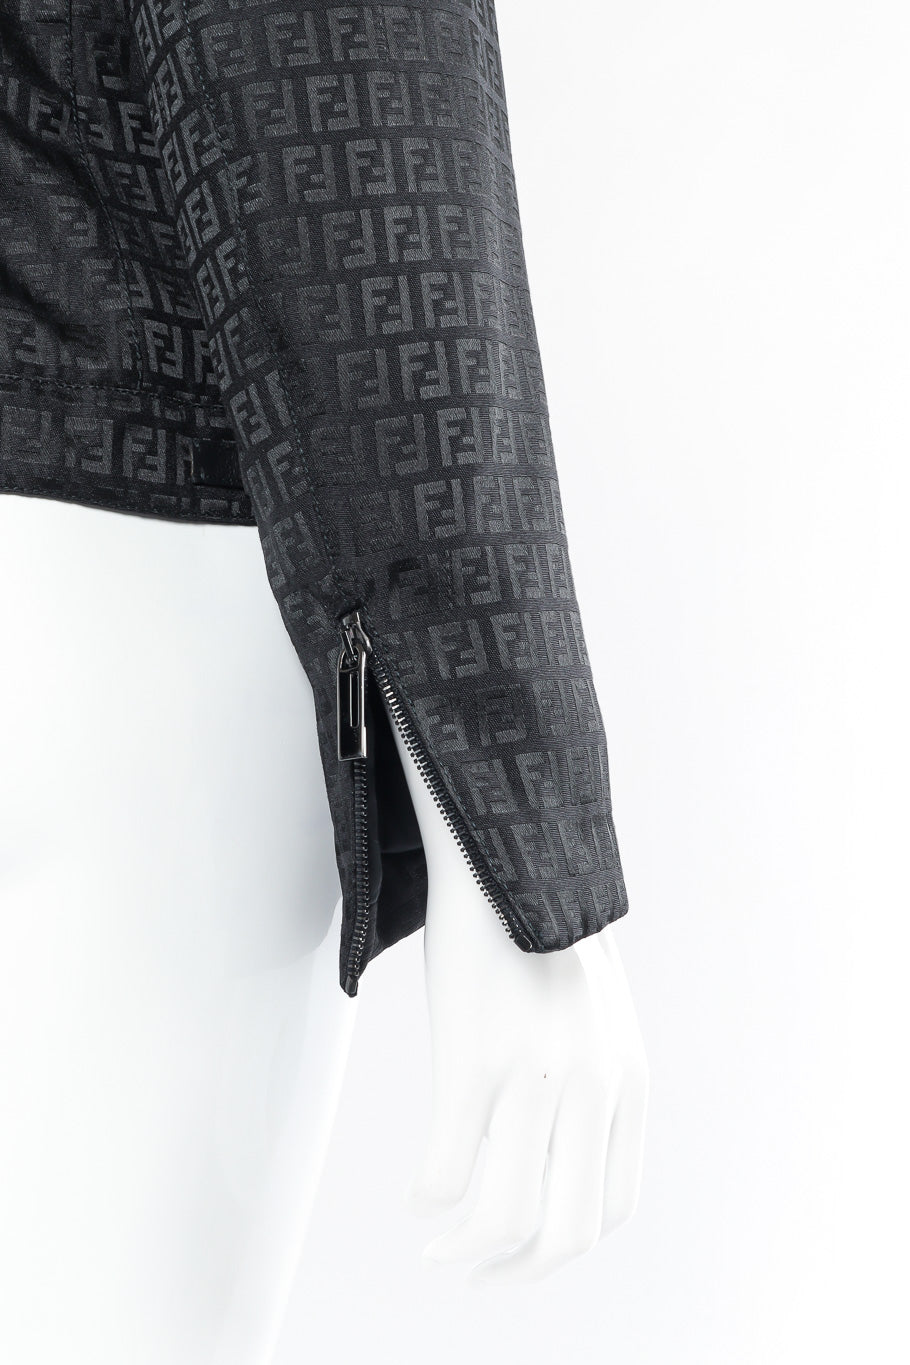 Fendi zucca monogram jacket sleeve zipper detail @recessla